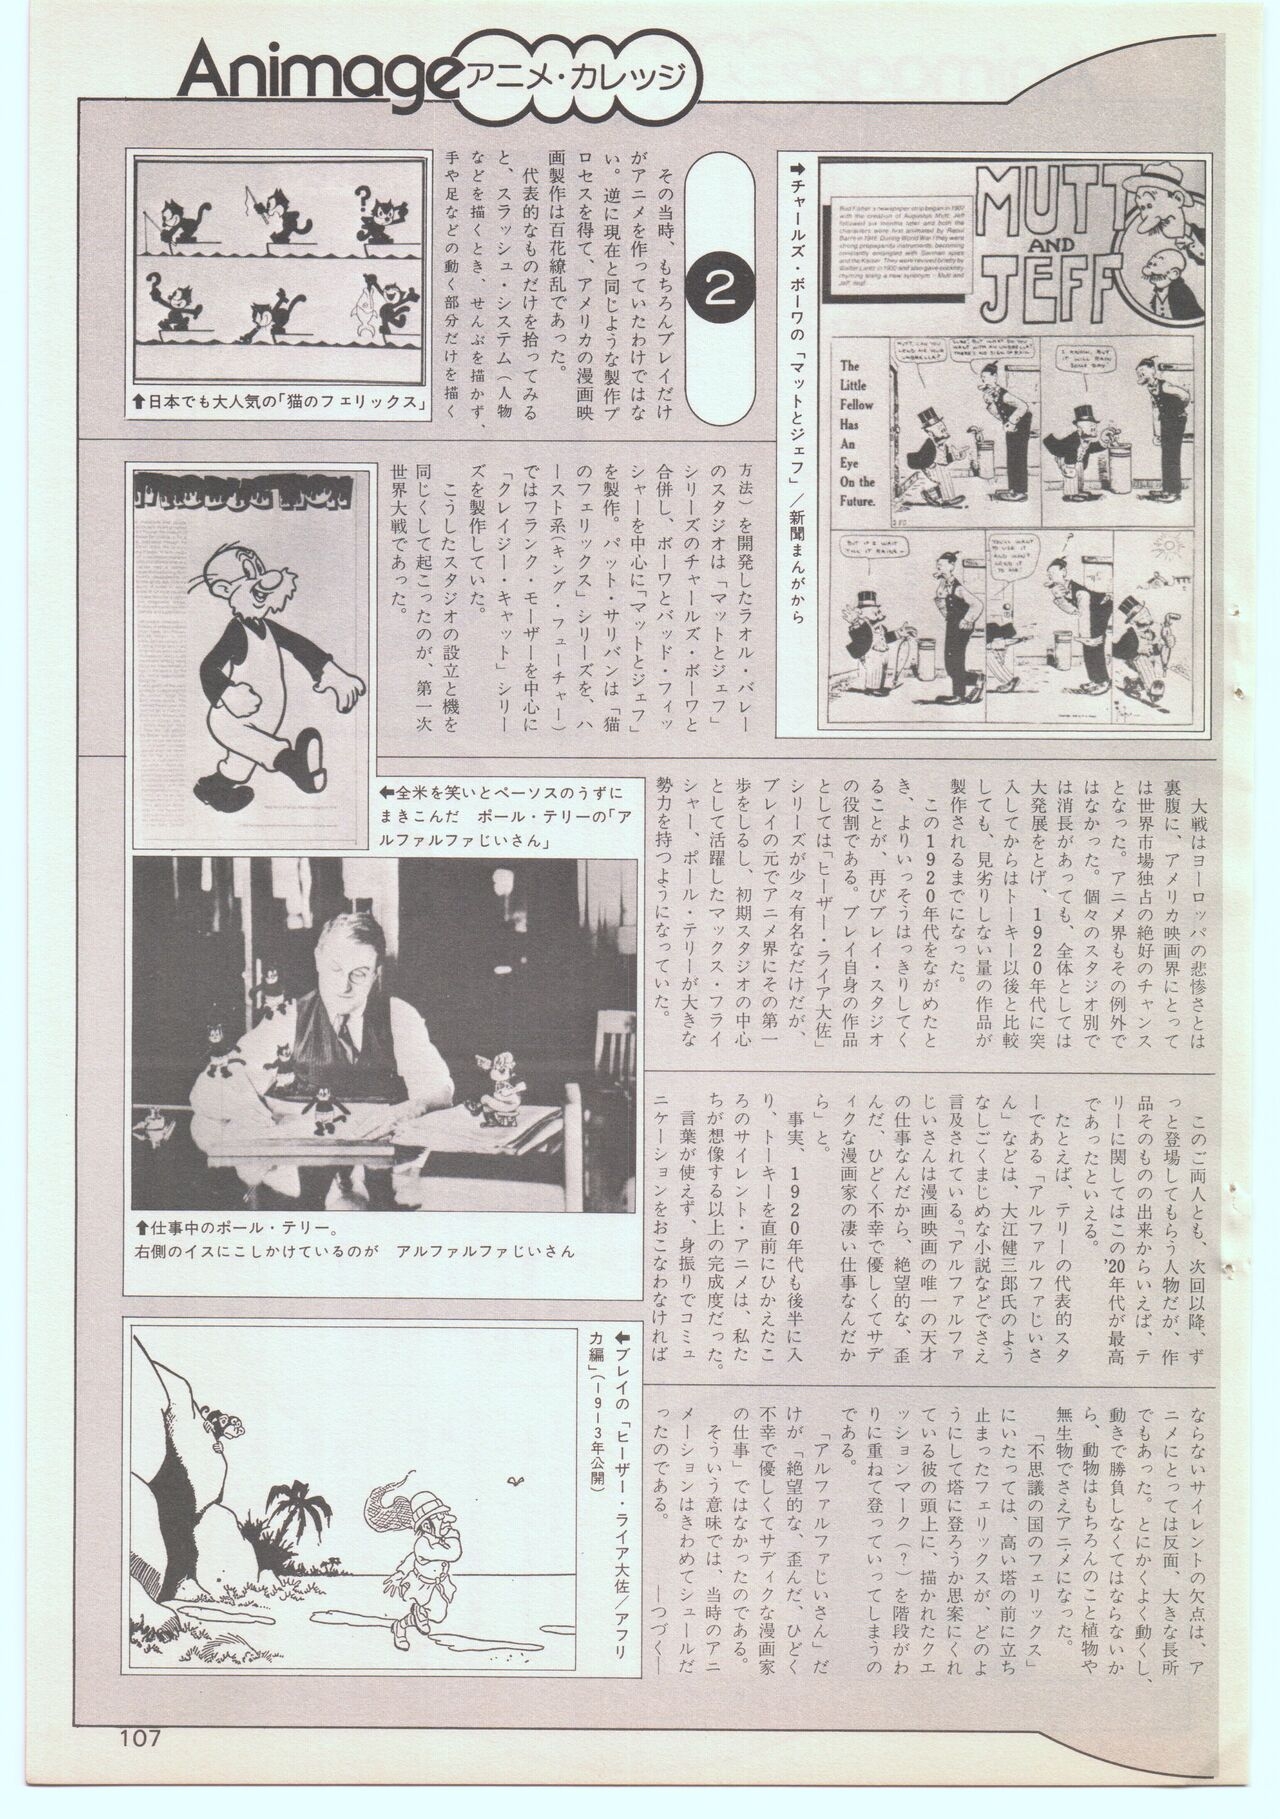 Animage 1978 v002 (2nd Issue) 102